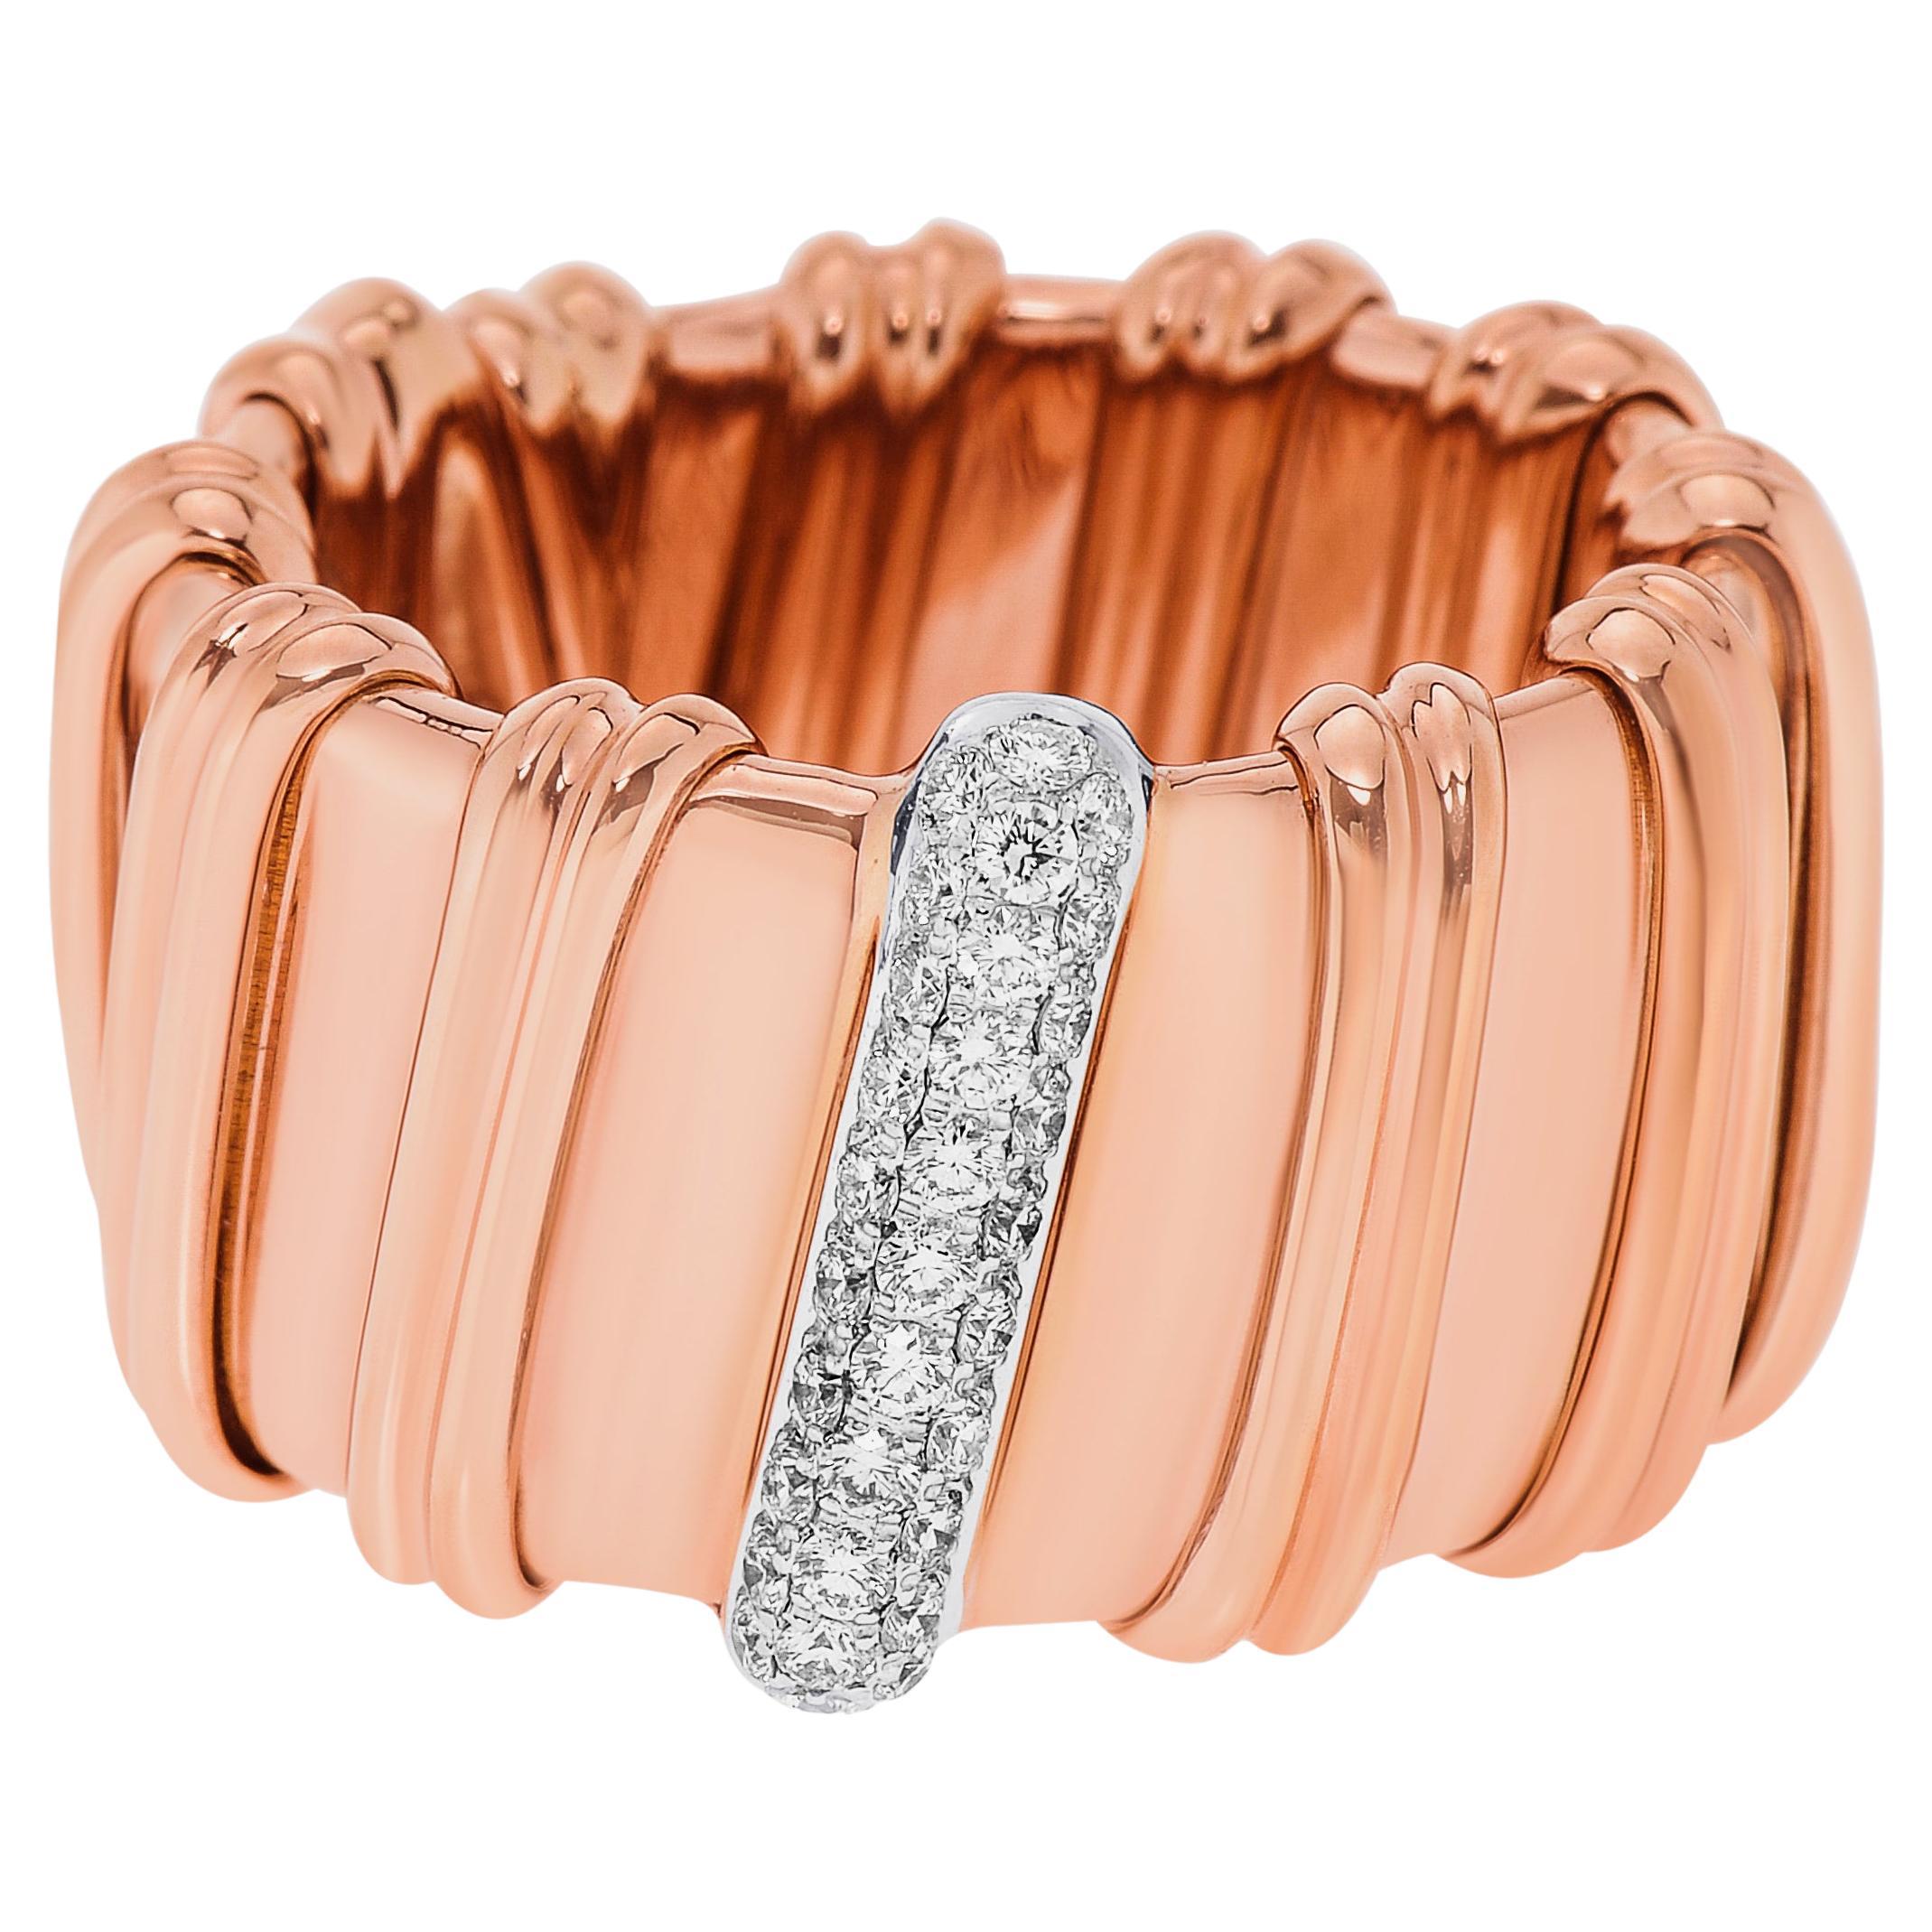 Roberto Coin Nabucco 18K Rose Gold Diamond Flexible Band Ring Sz 7 For Sale